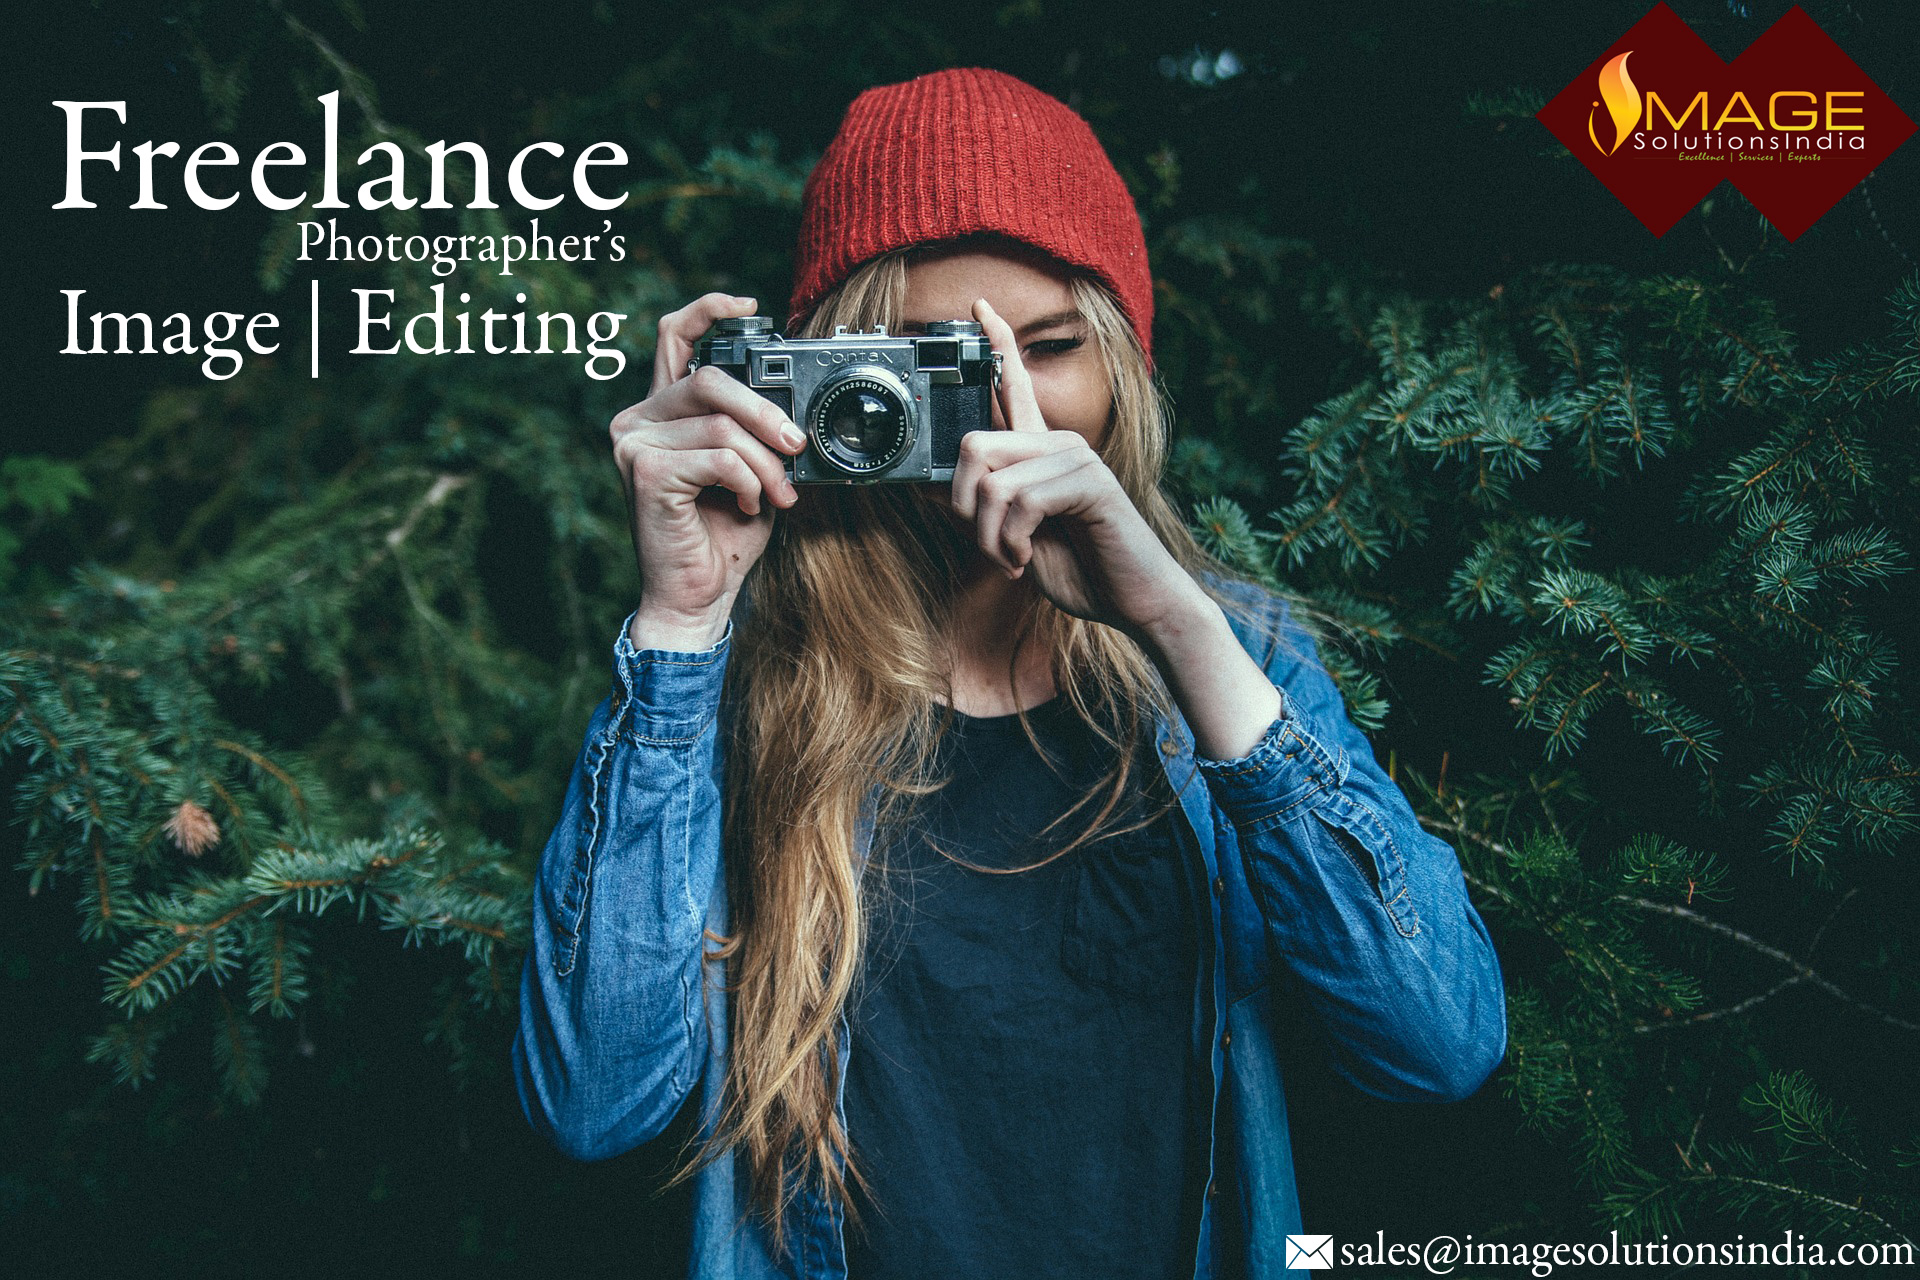 Freelance Photographers Image Editing Services